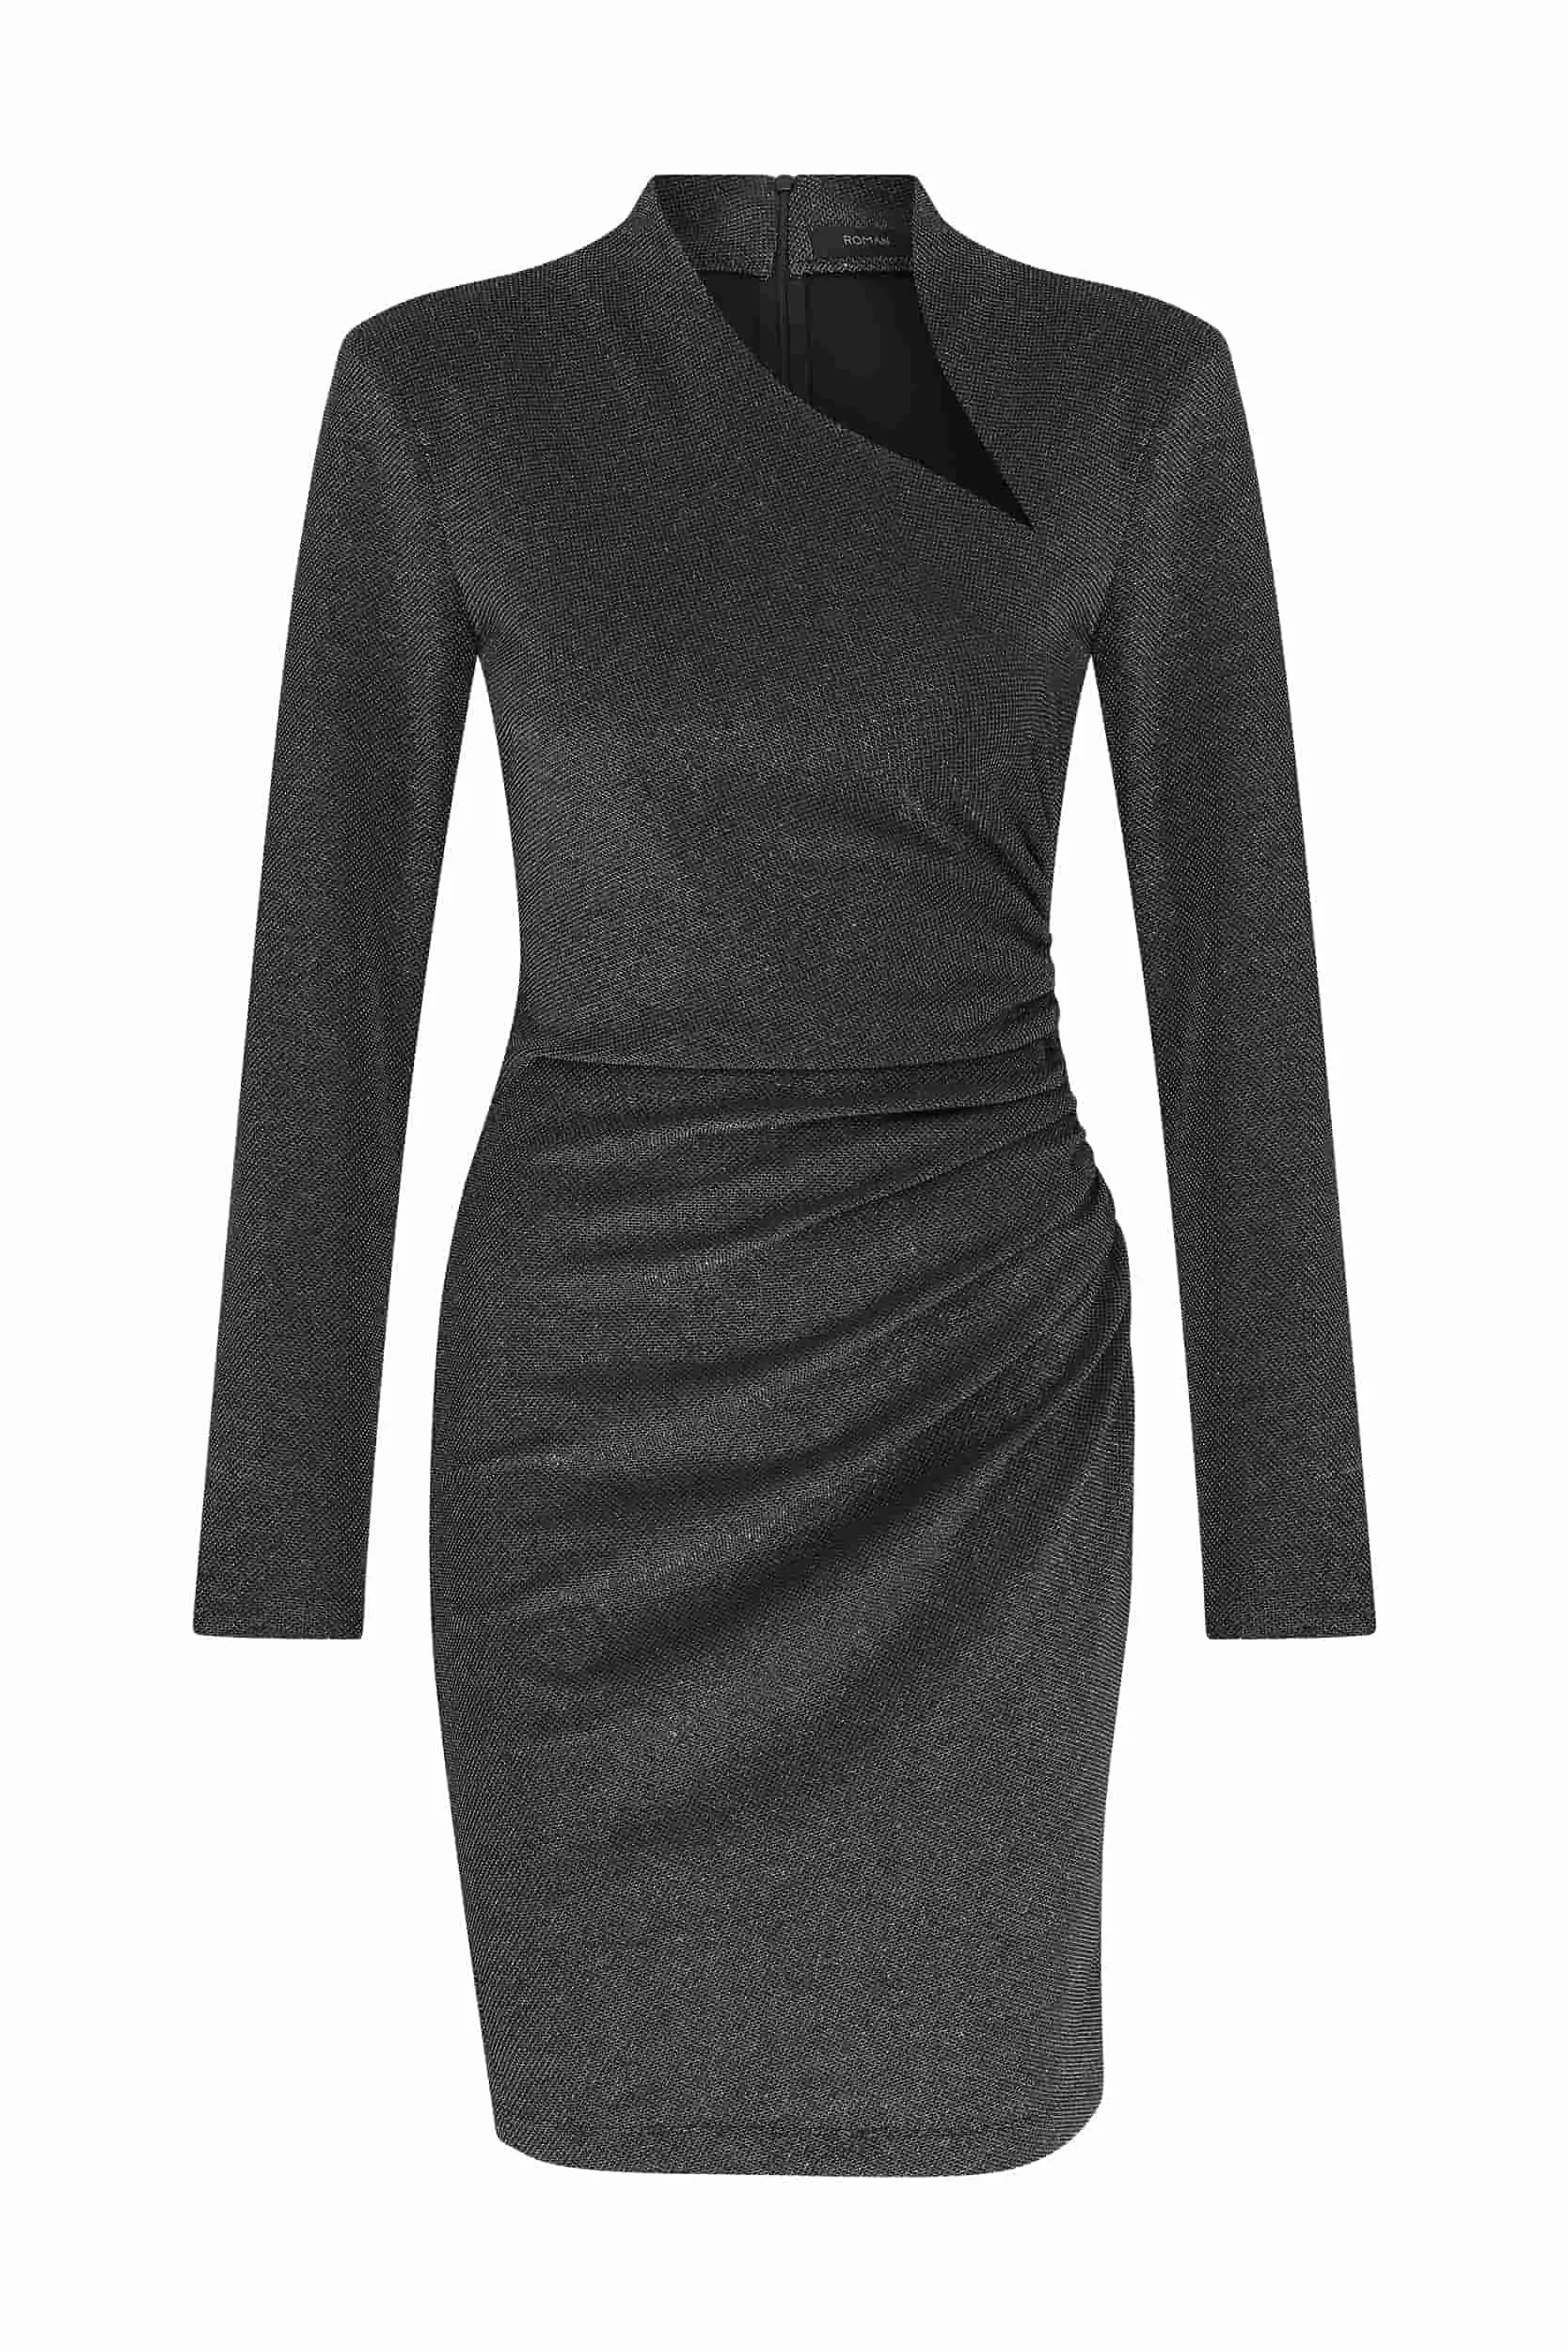 Roman Shimmer Ruched Full Sleeve Cocktail Dress - 2 / Black. 1